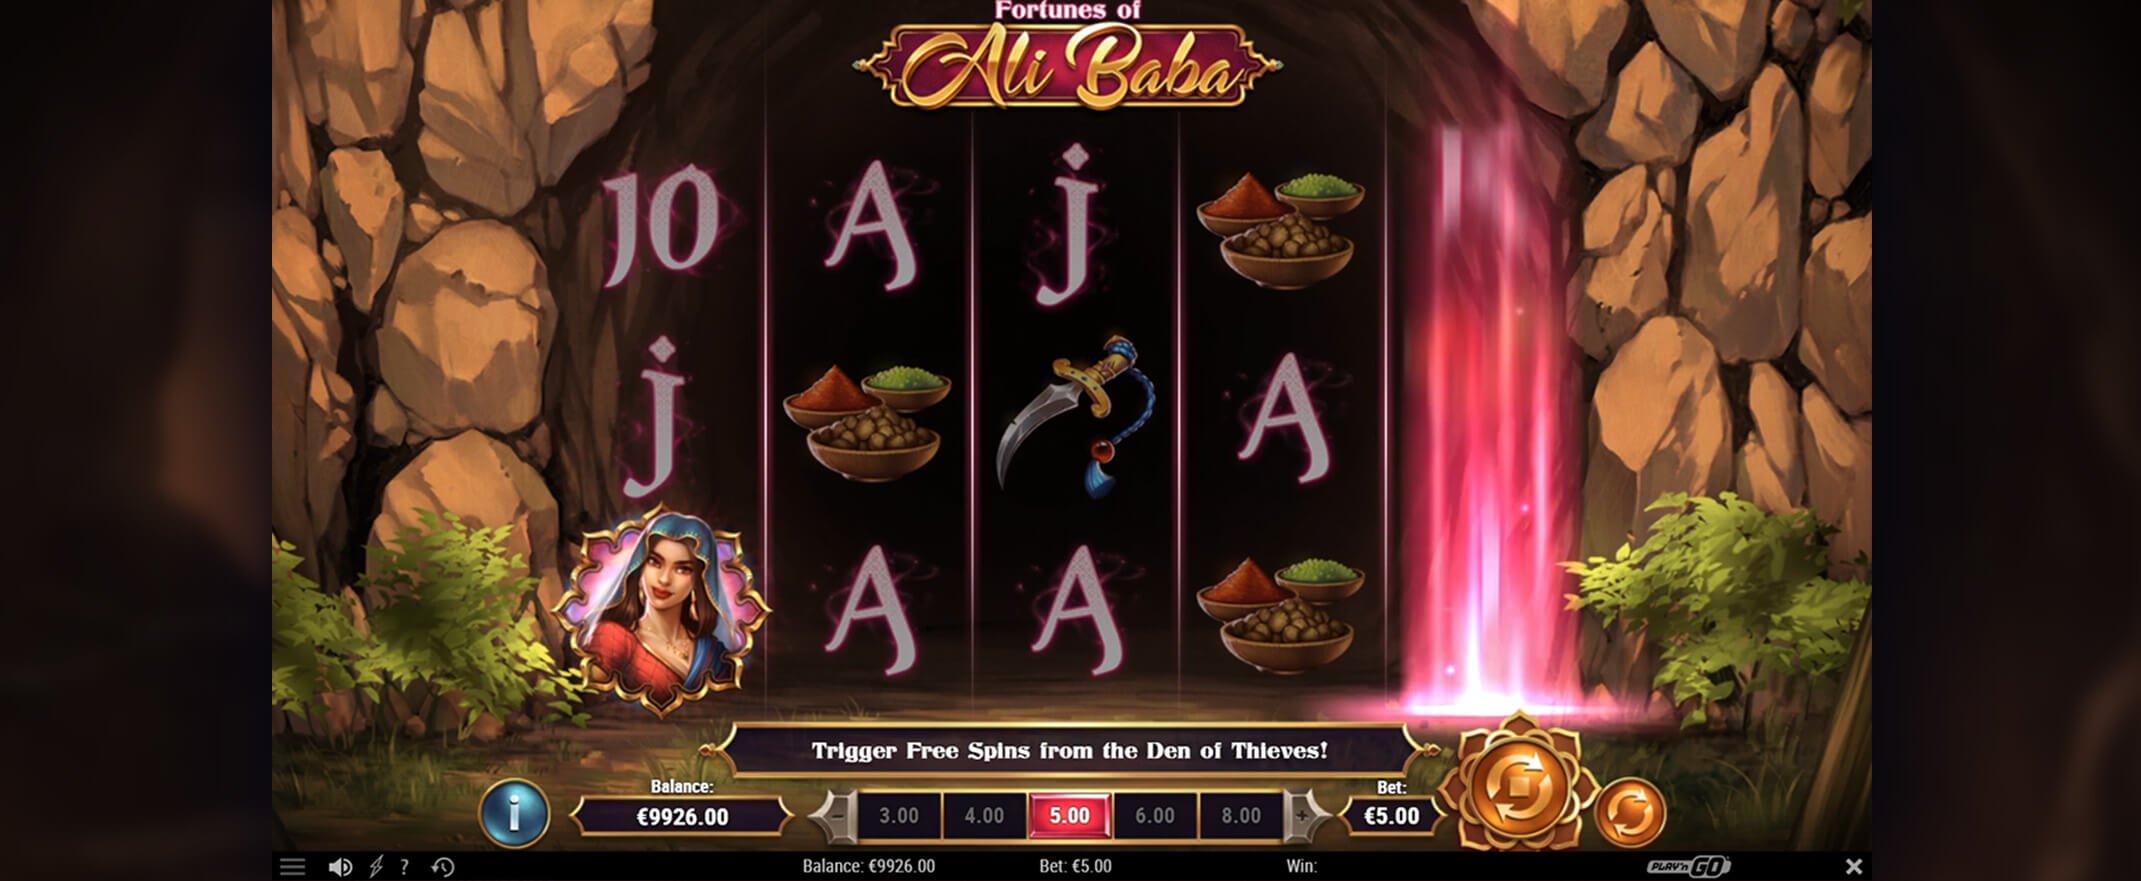 Fortunes of Ali Baba Spielautomat spielen